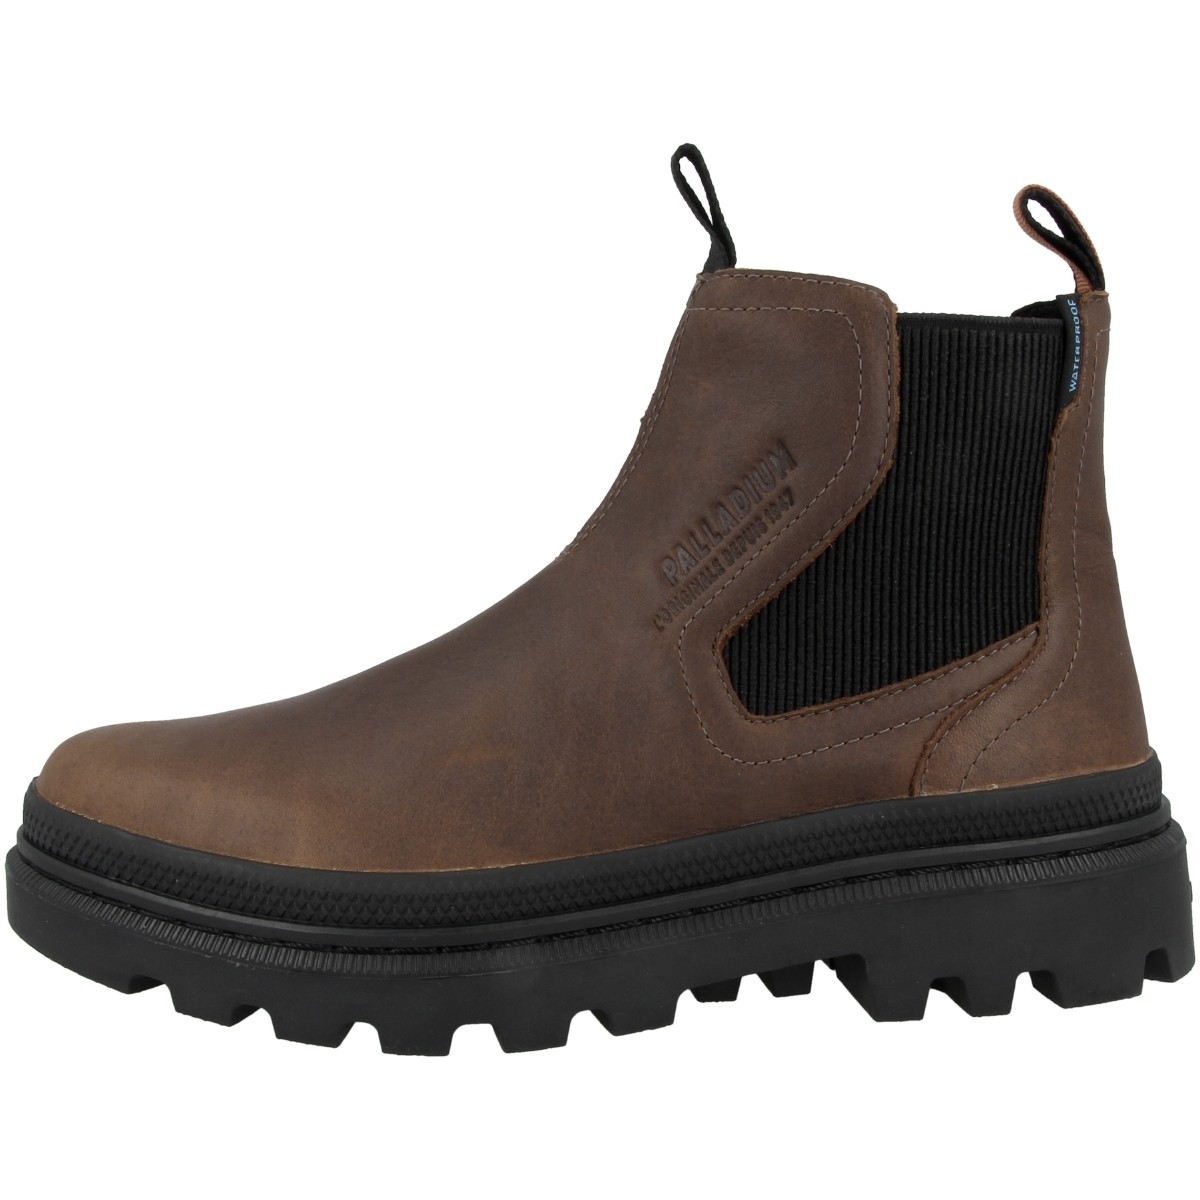 Palladium Pallatrooper Chelsea Waterproof Boots